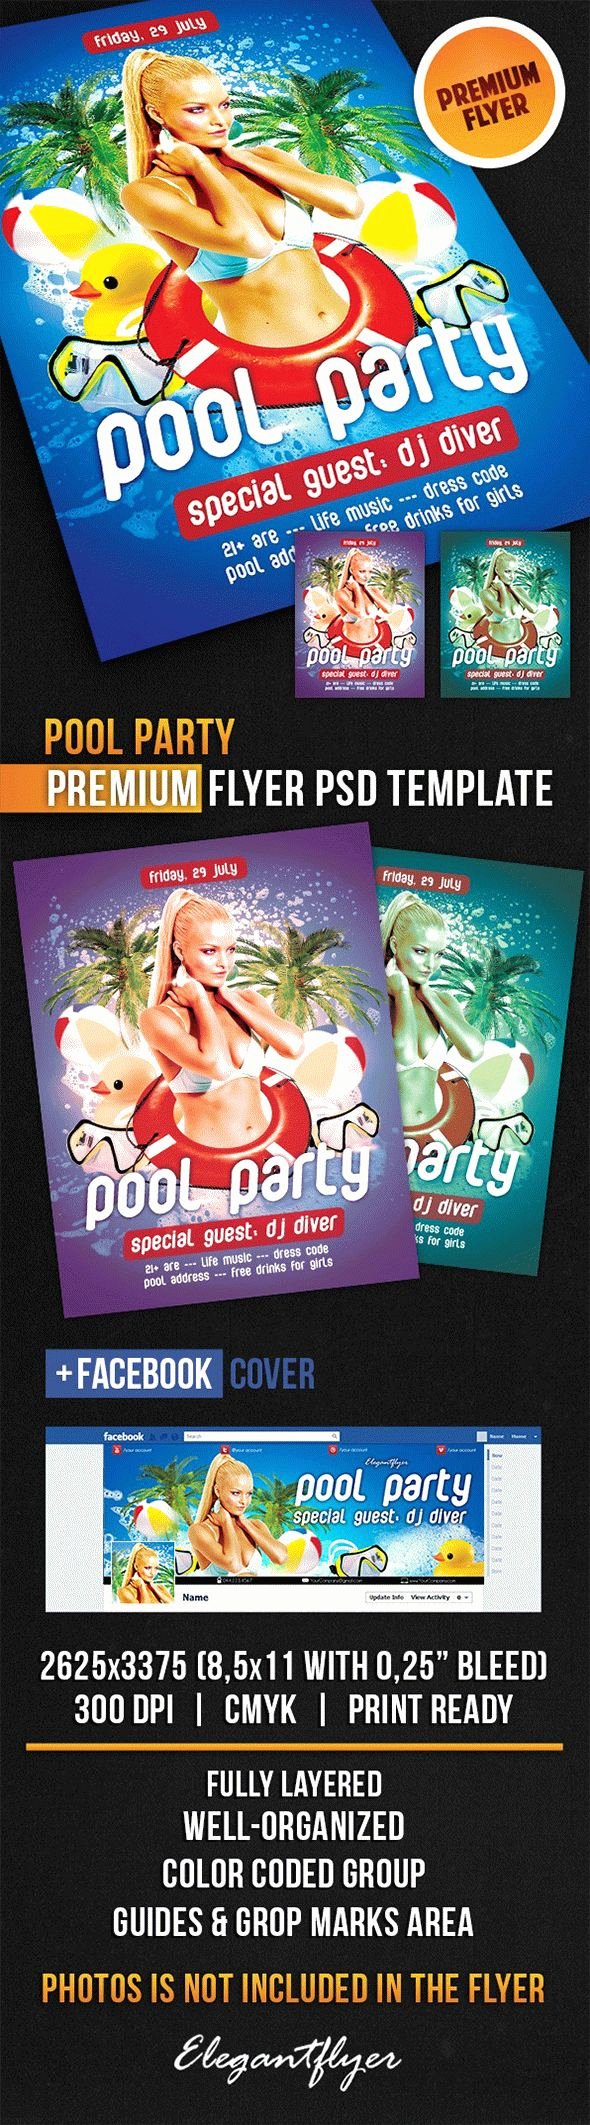 Pool Party Flyers Templates Fresh Pool Party Flyer Template – by Elegantflyer